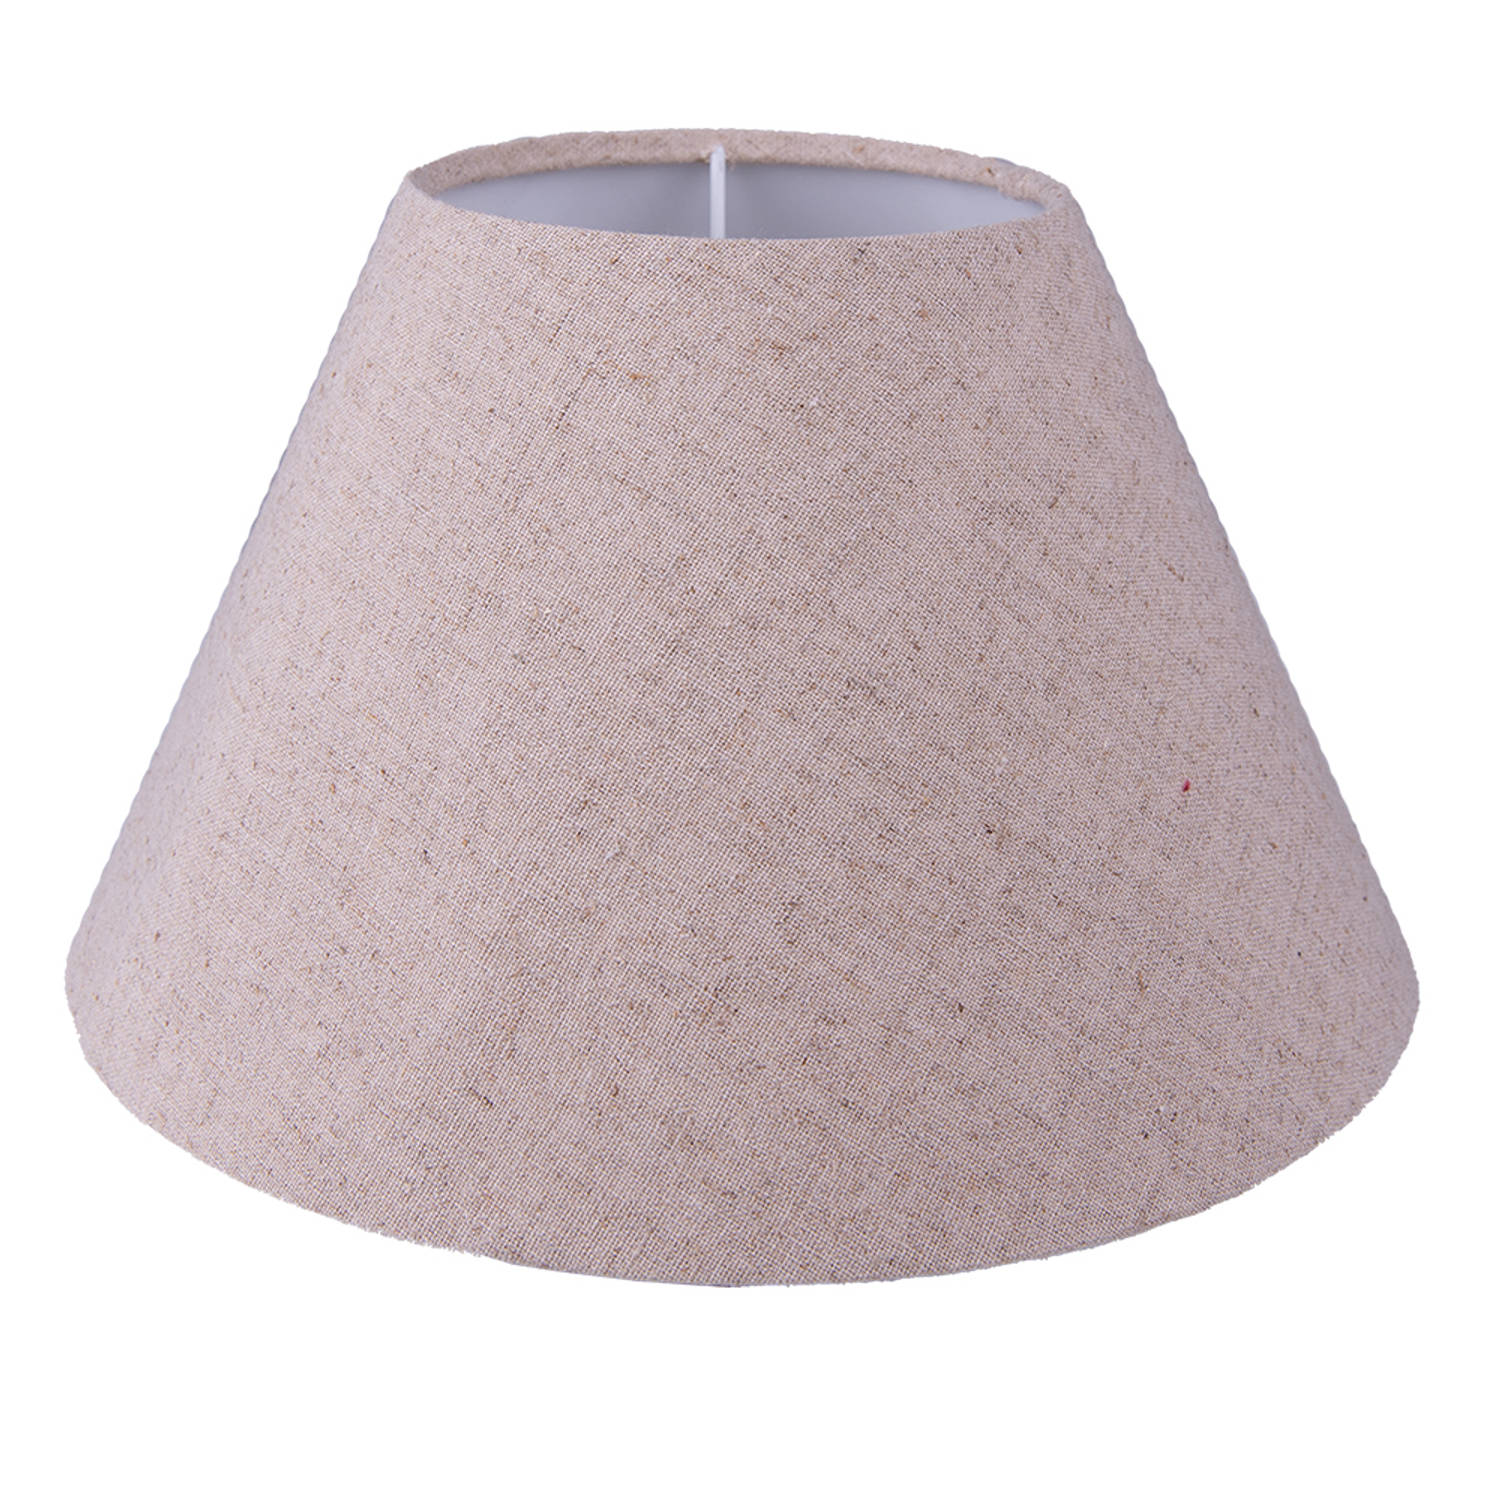 Haes Deco Lampenkap Natural Cosy Beige Rond Formaat Ø 23x15 Cm, Voor Fitting E27 Tafellamp, Hanglamp